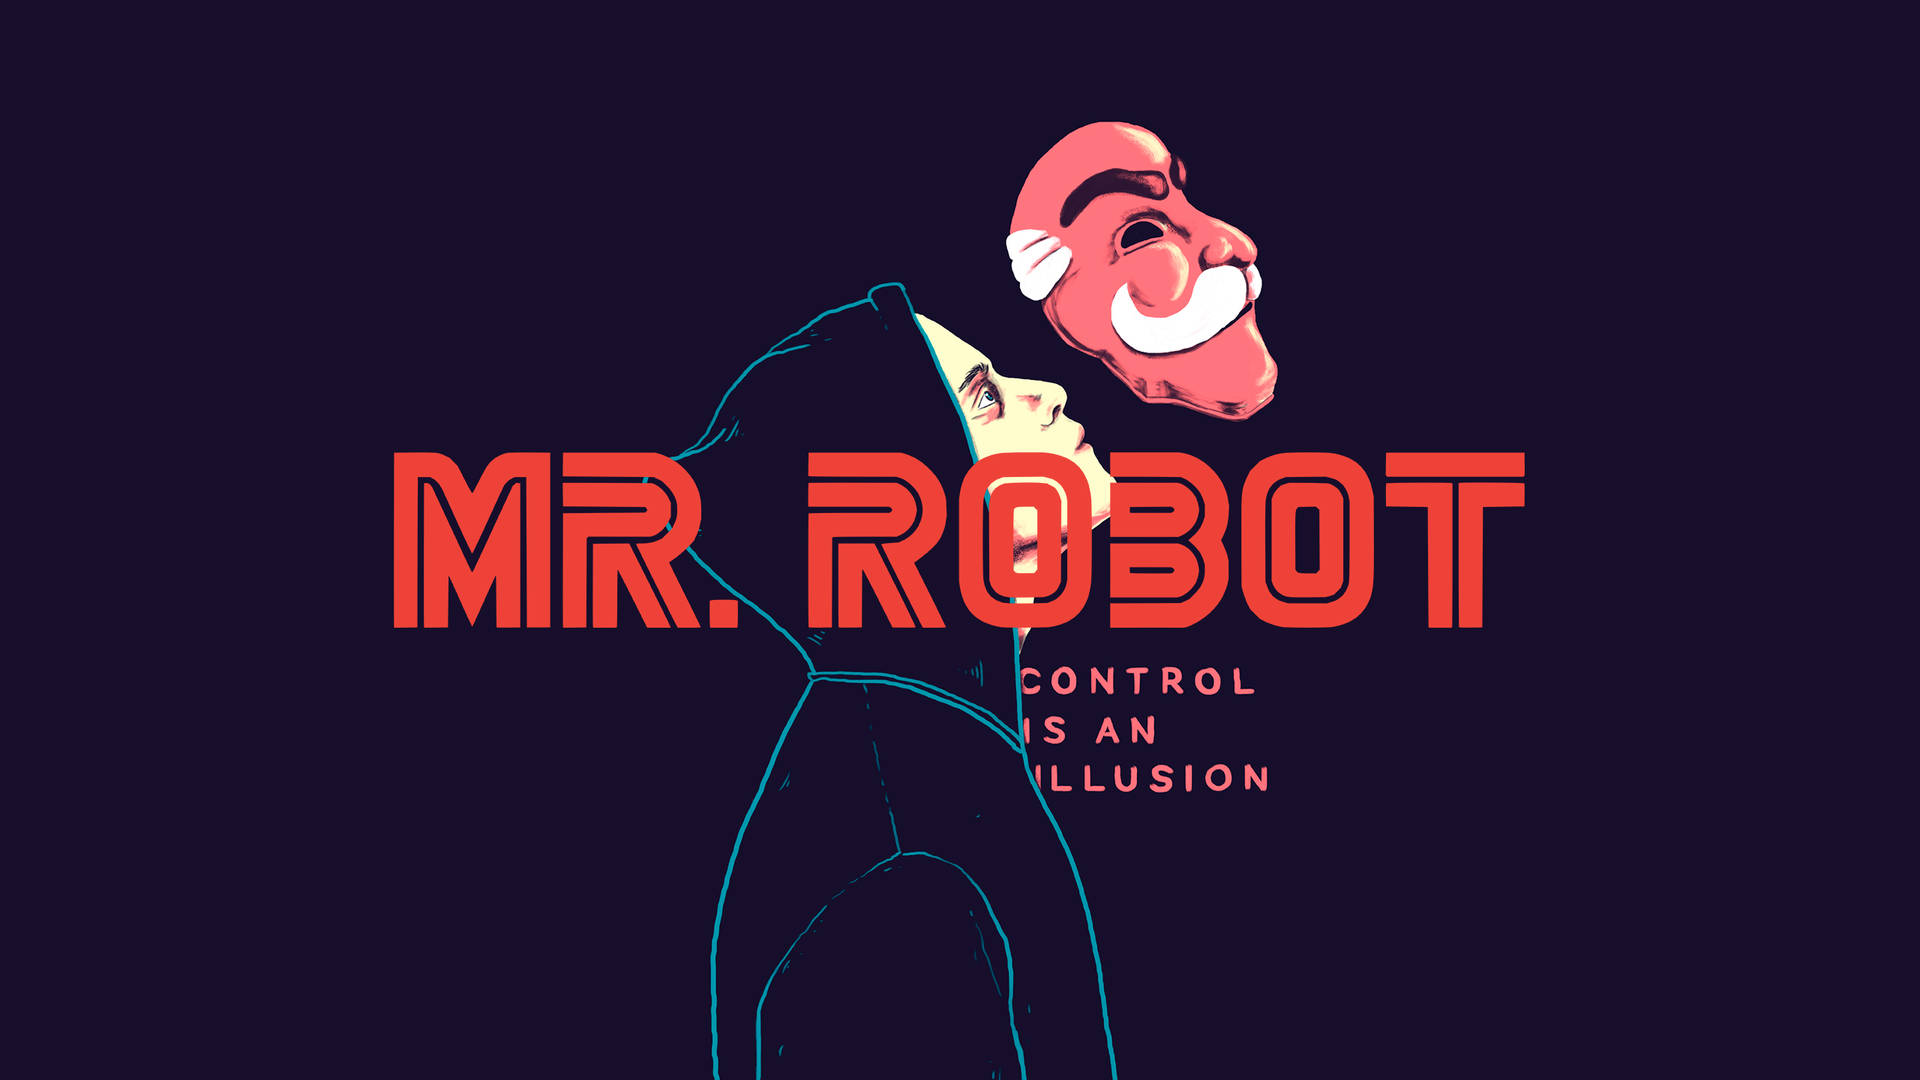 Mr. Robot Control Illusion